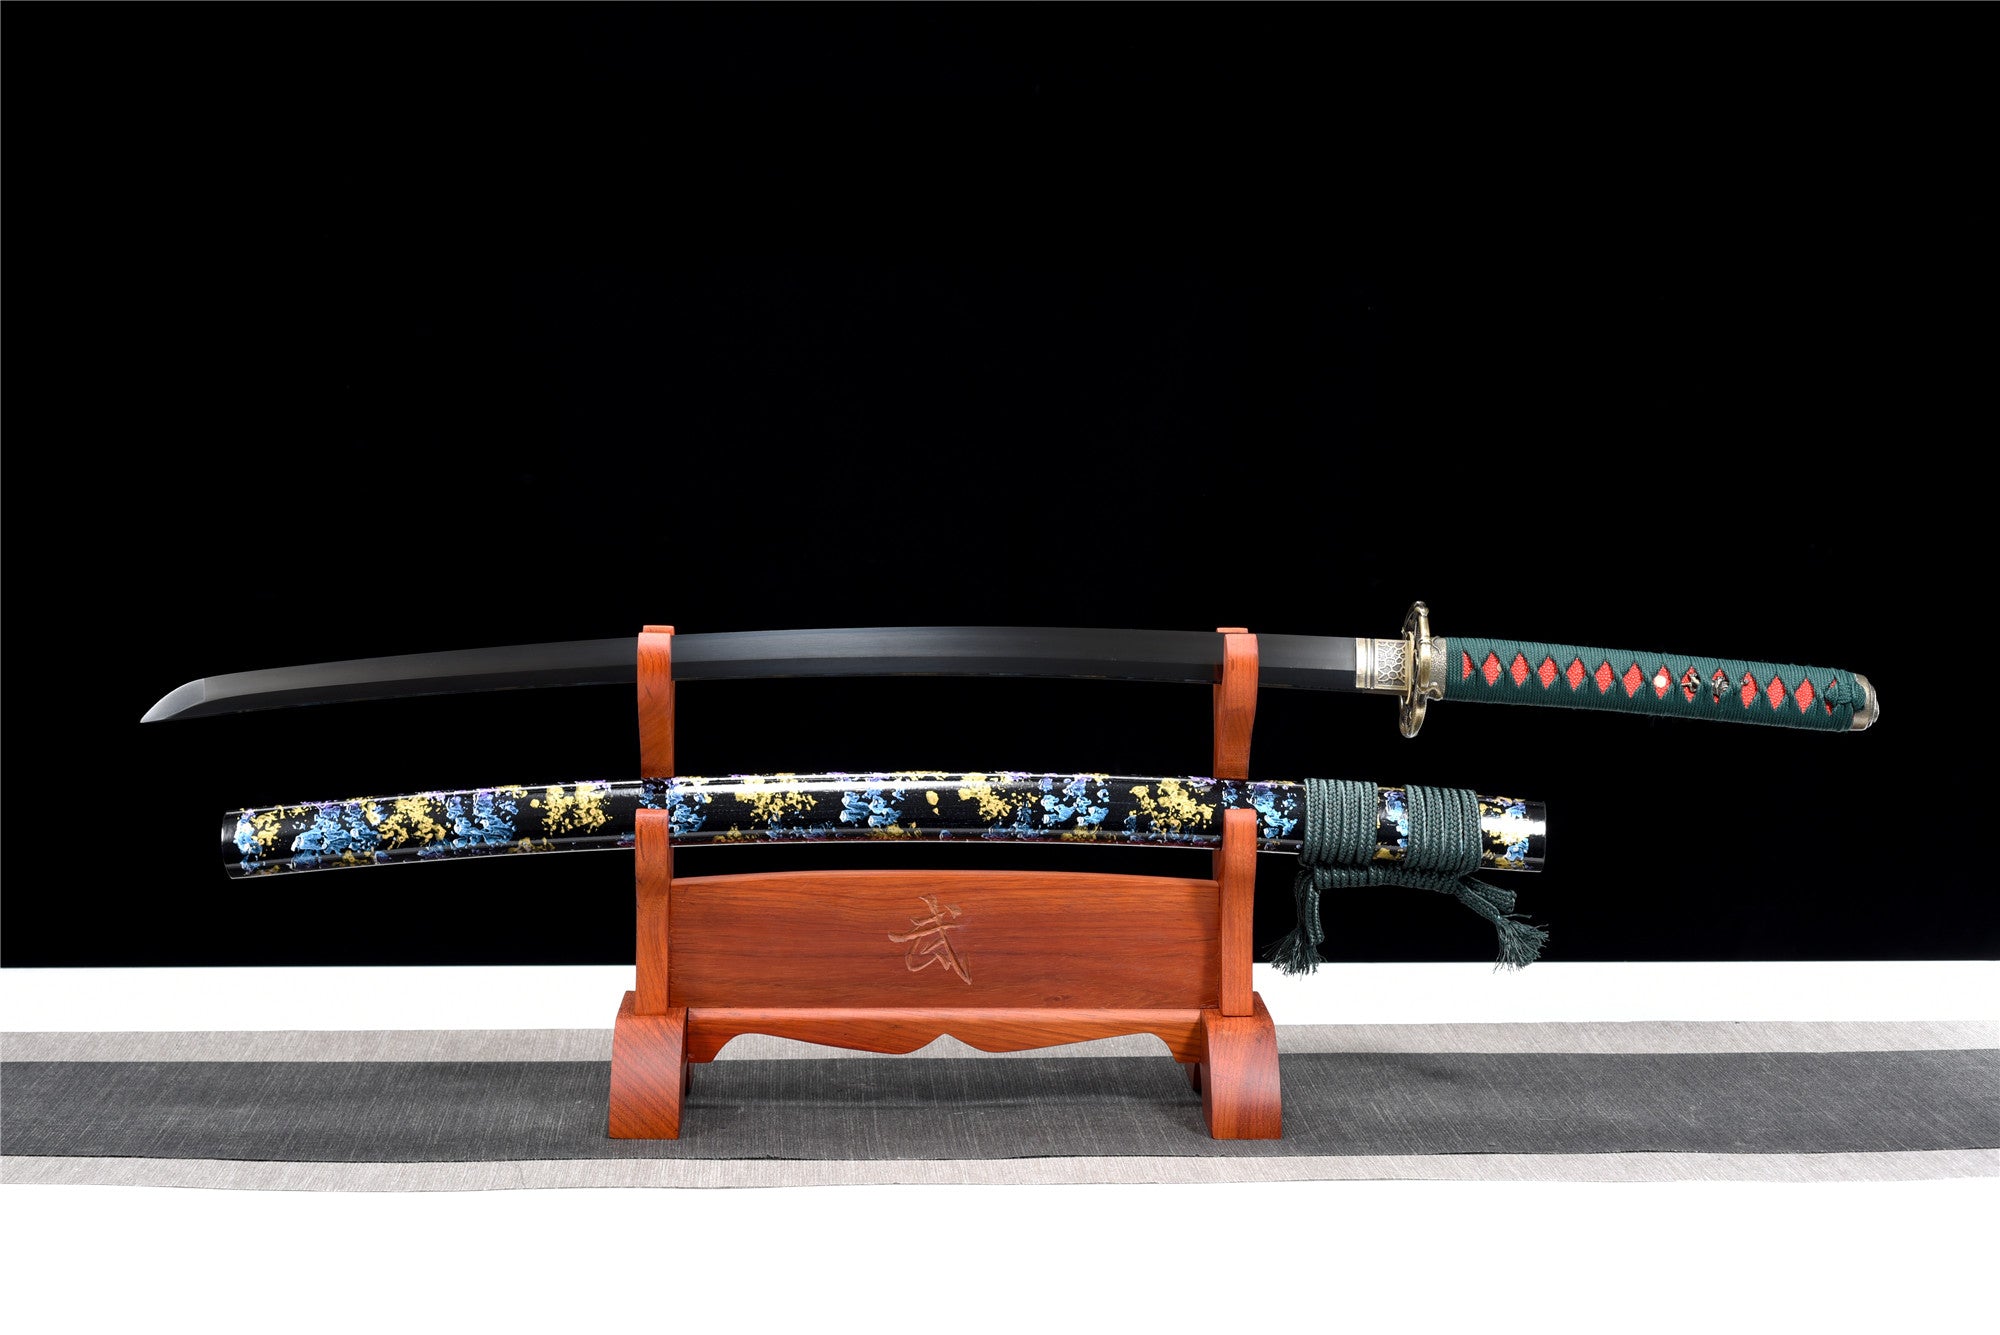 Shadow Snake Katana,Baked black series,Japanese Samurai Sword,Real Handmade Katana,High Manganese Steel